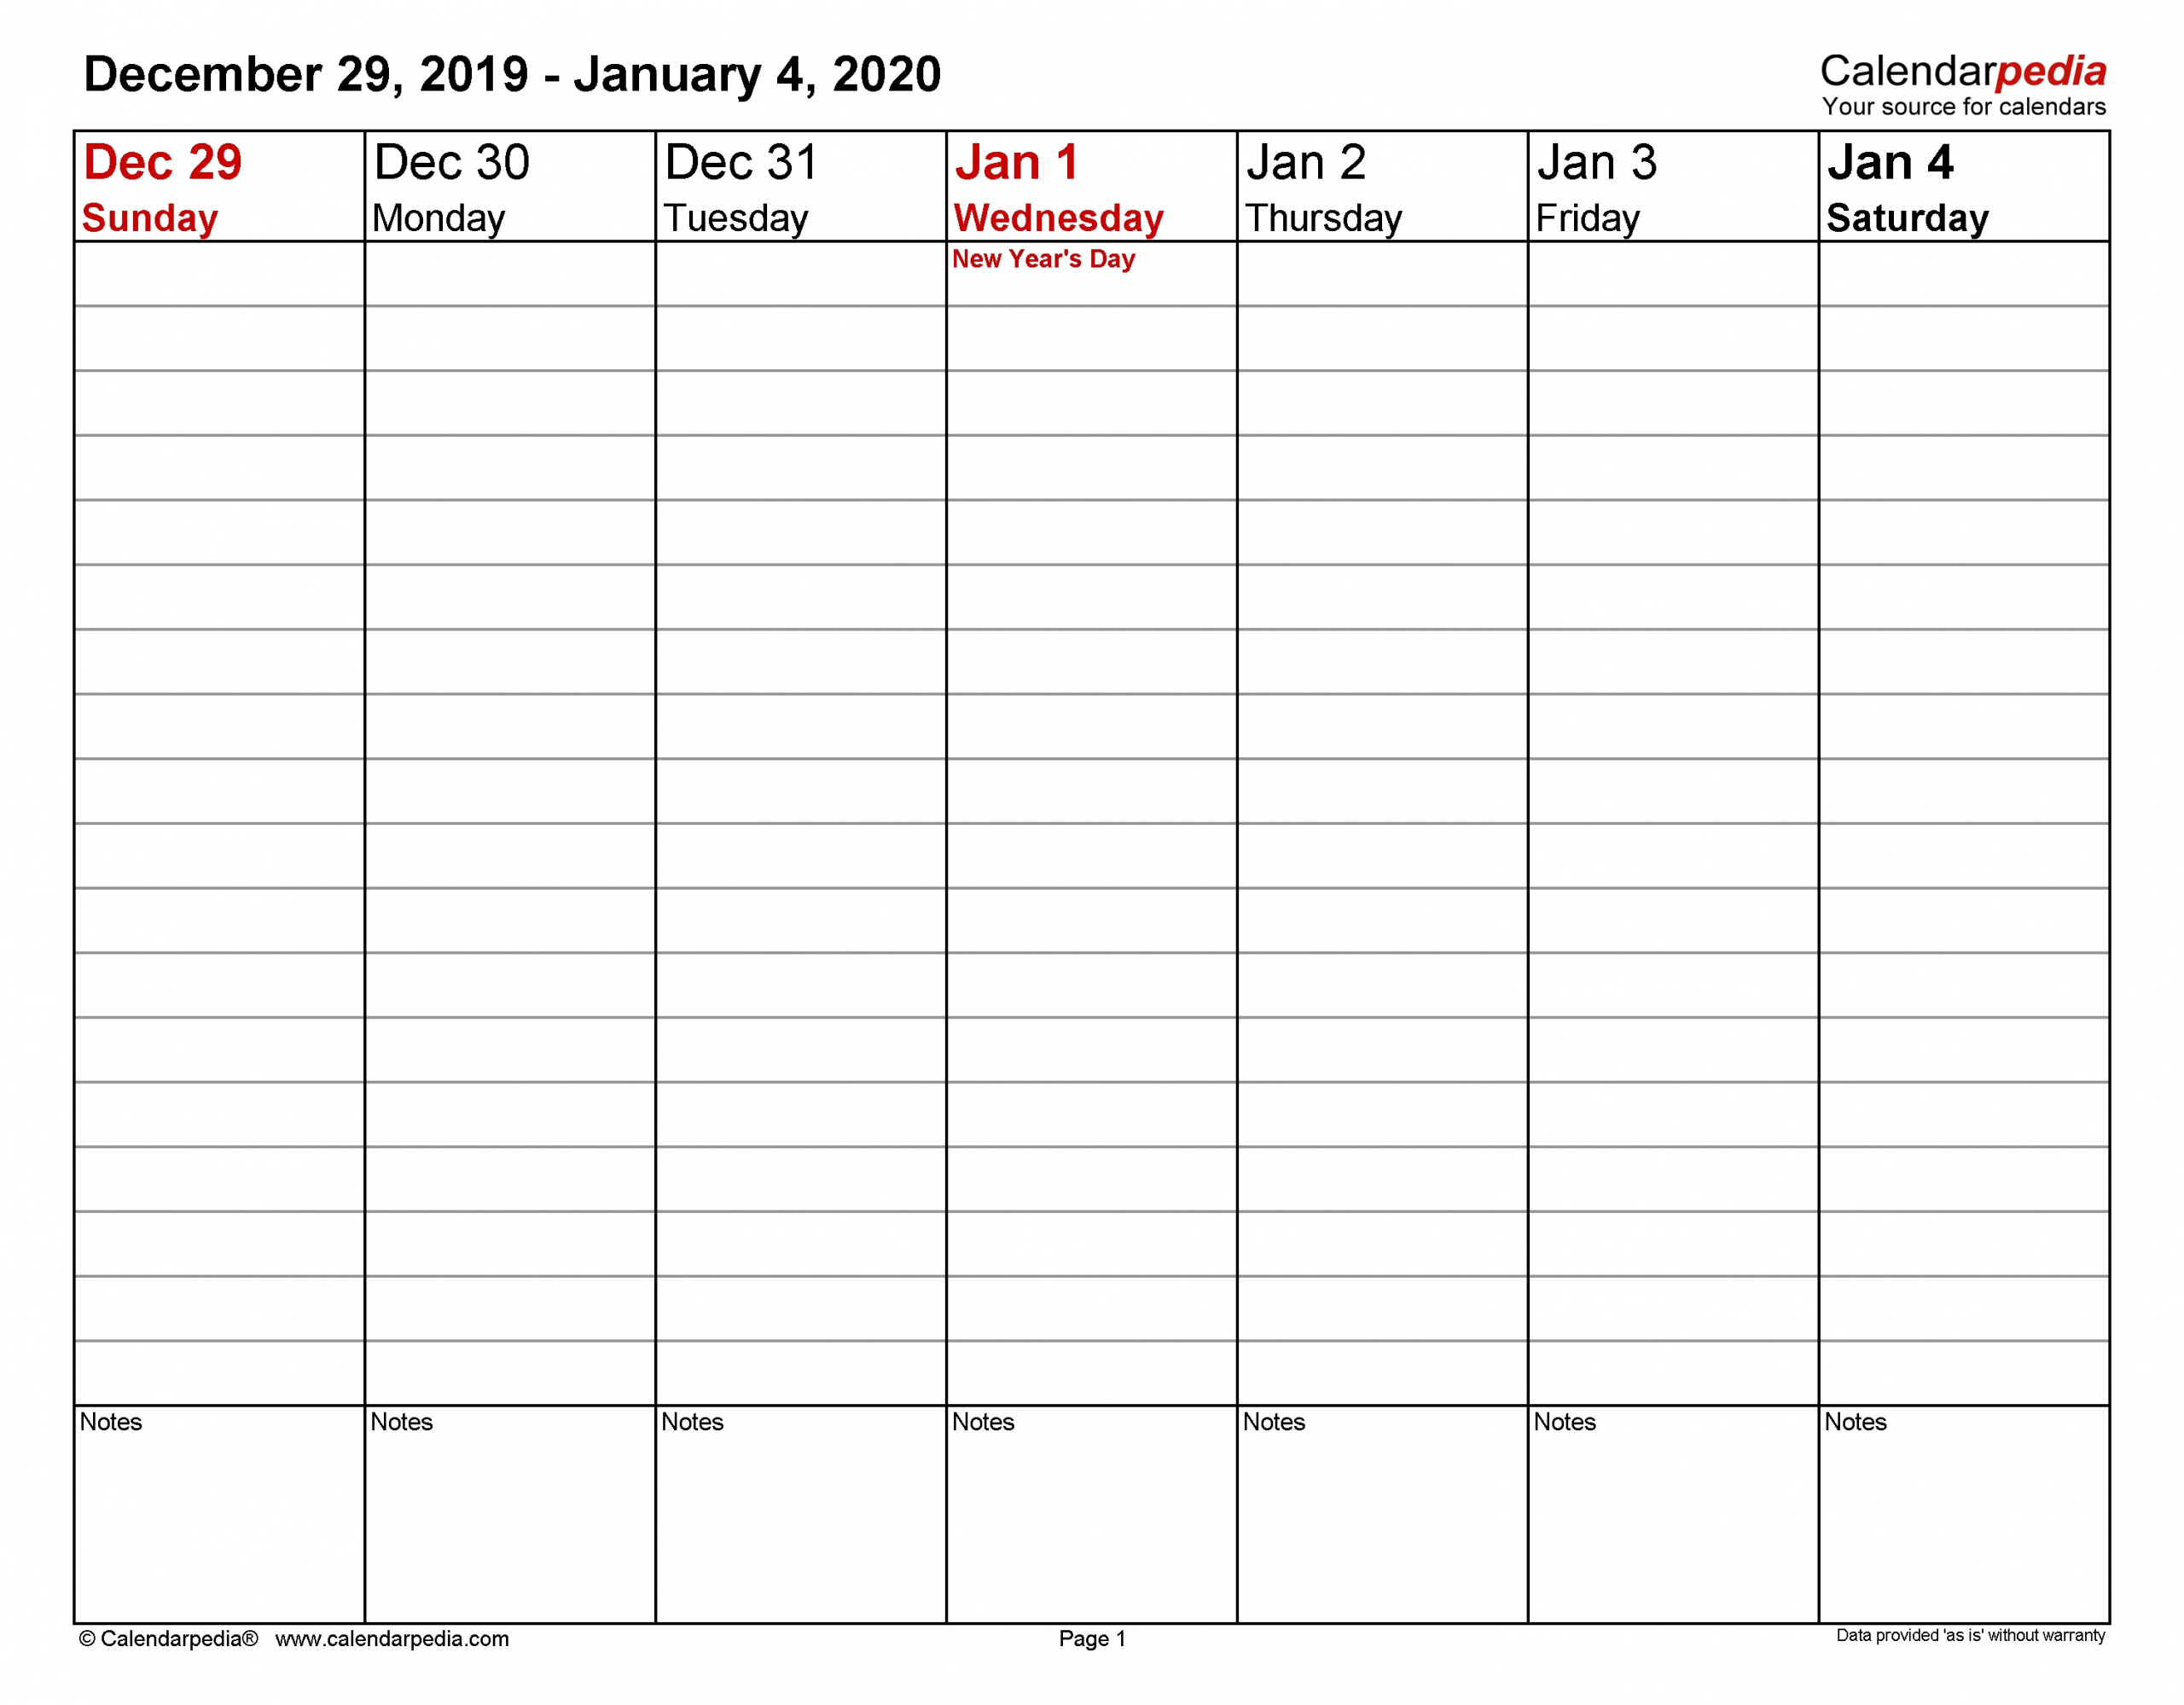 Weekly Calendars 2020 For Pdf - 12 Free Printable Templates pertaining to Calendar 2020 Week Wise In Window